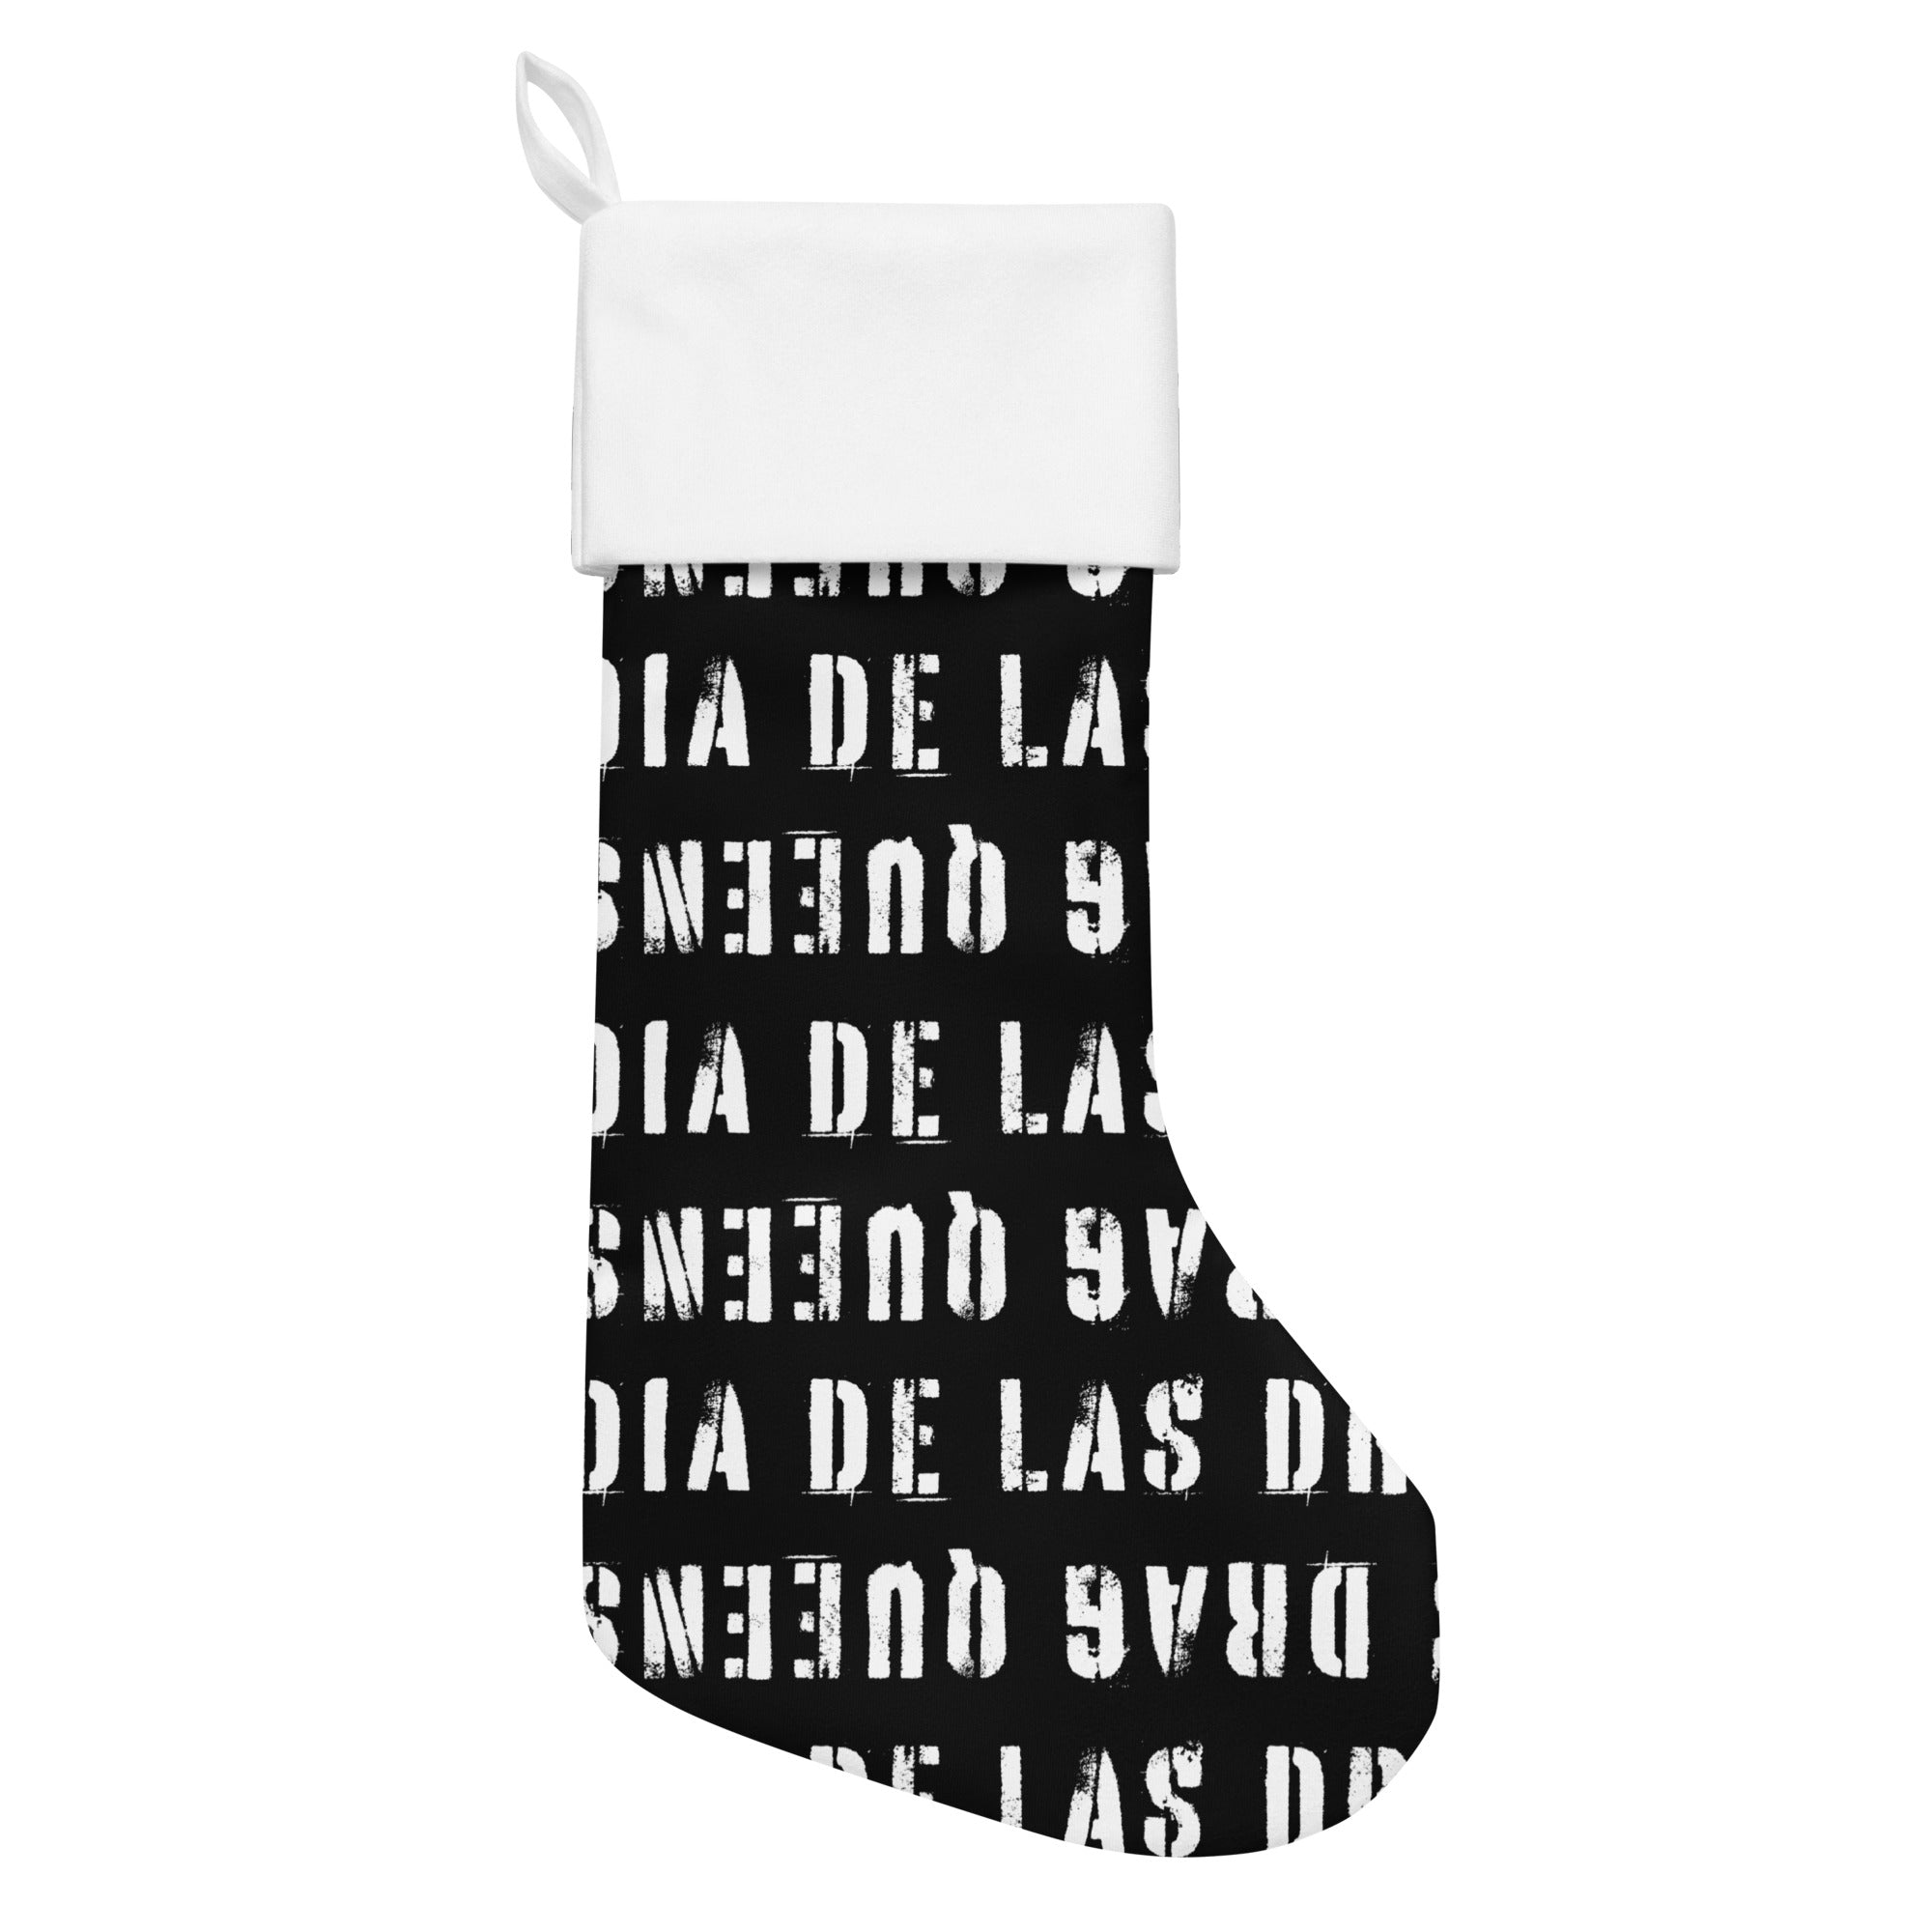 Dia De Las Drag Queens Logo 01 stocking